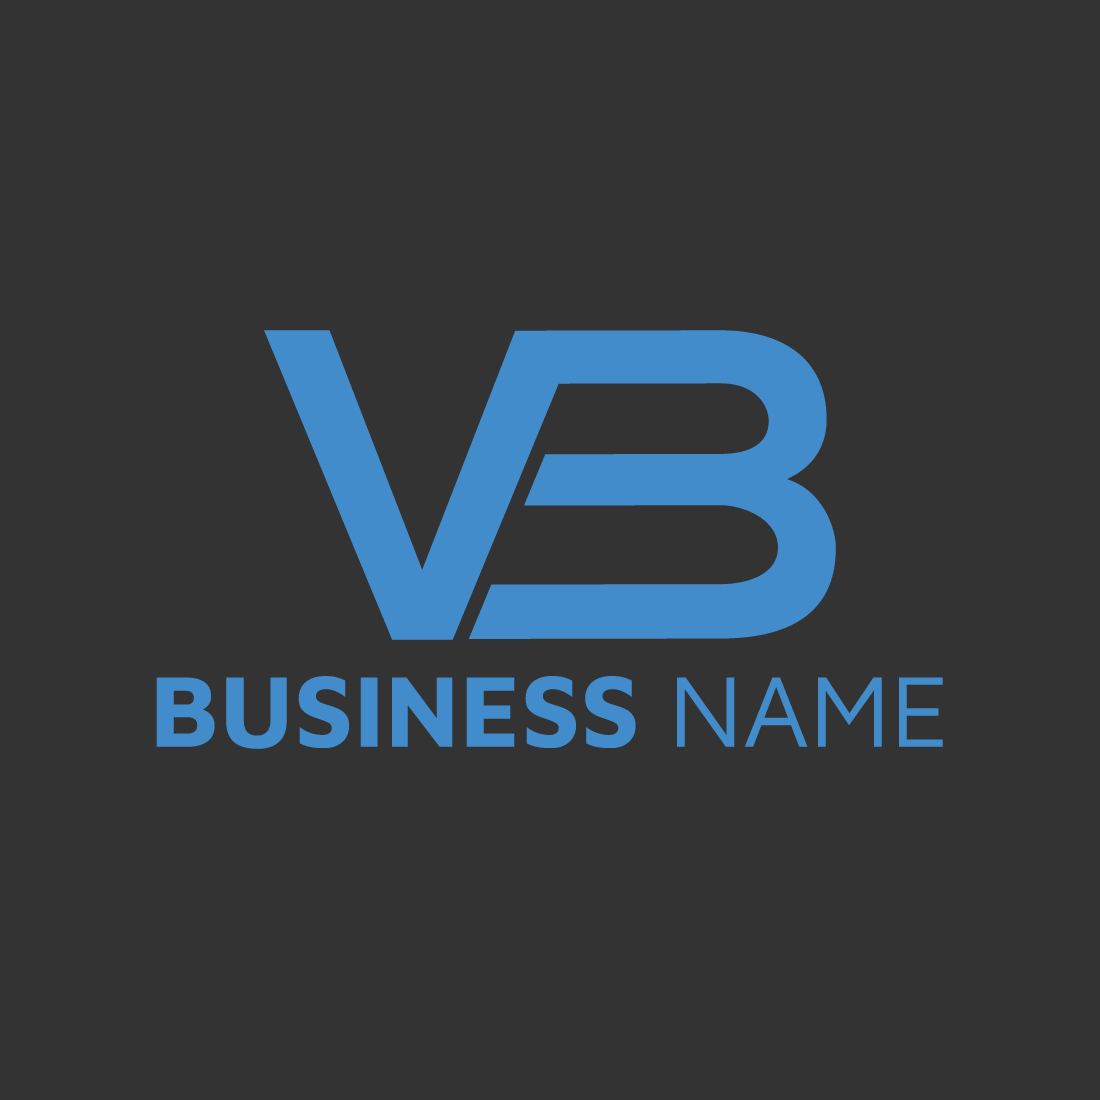 Premium Vector | Vb icon and text logo design with vector